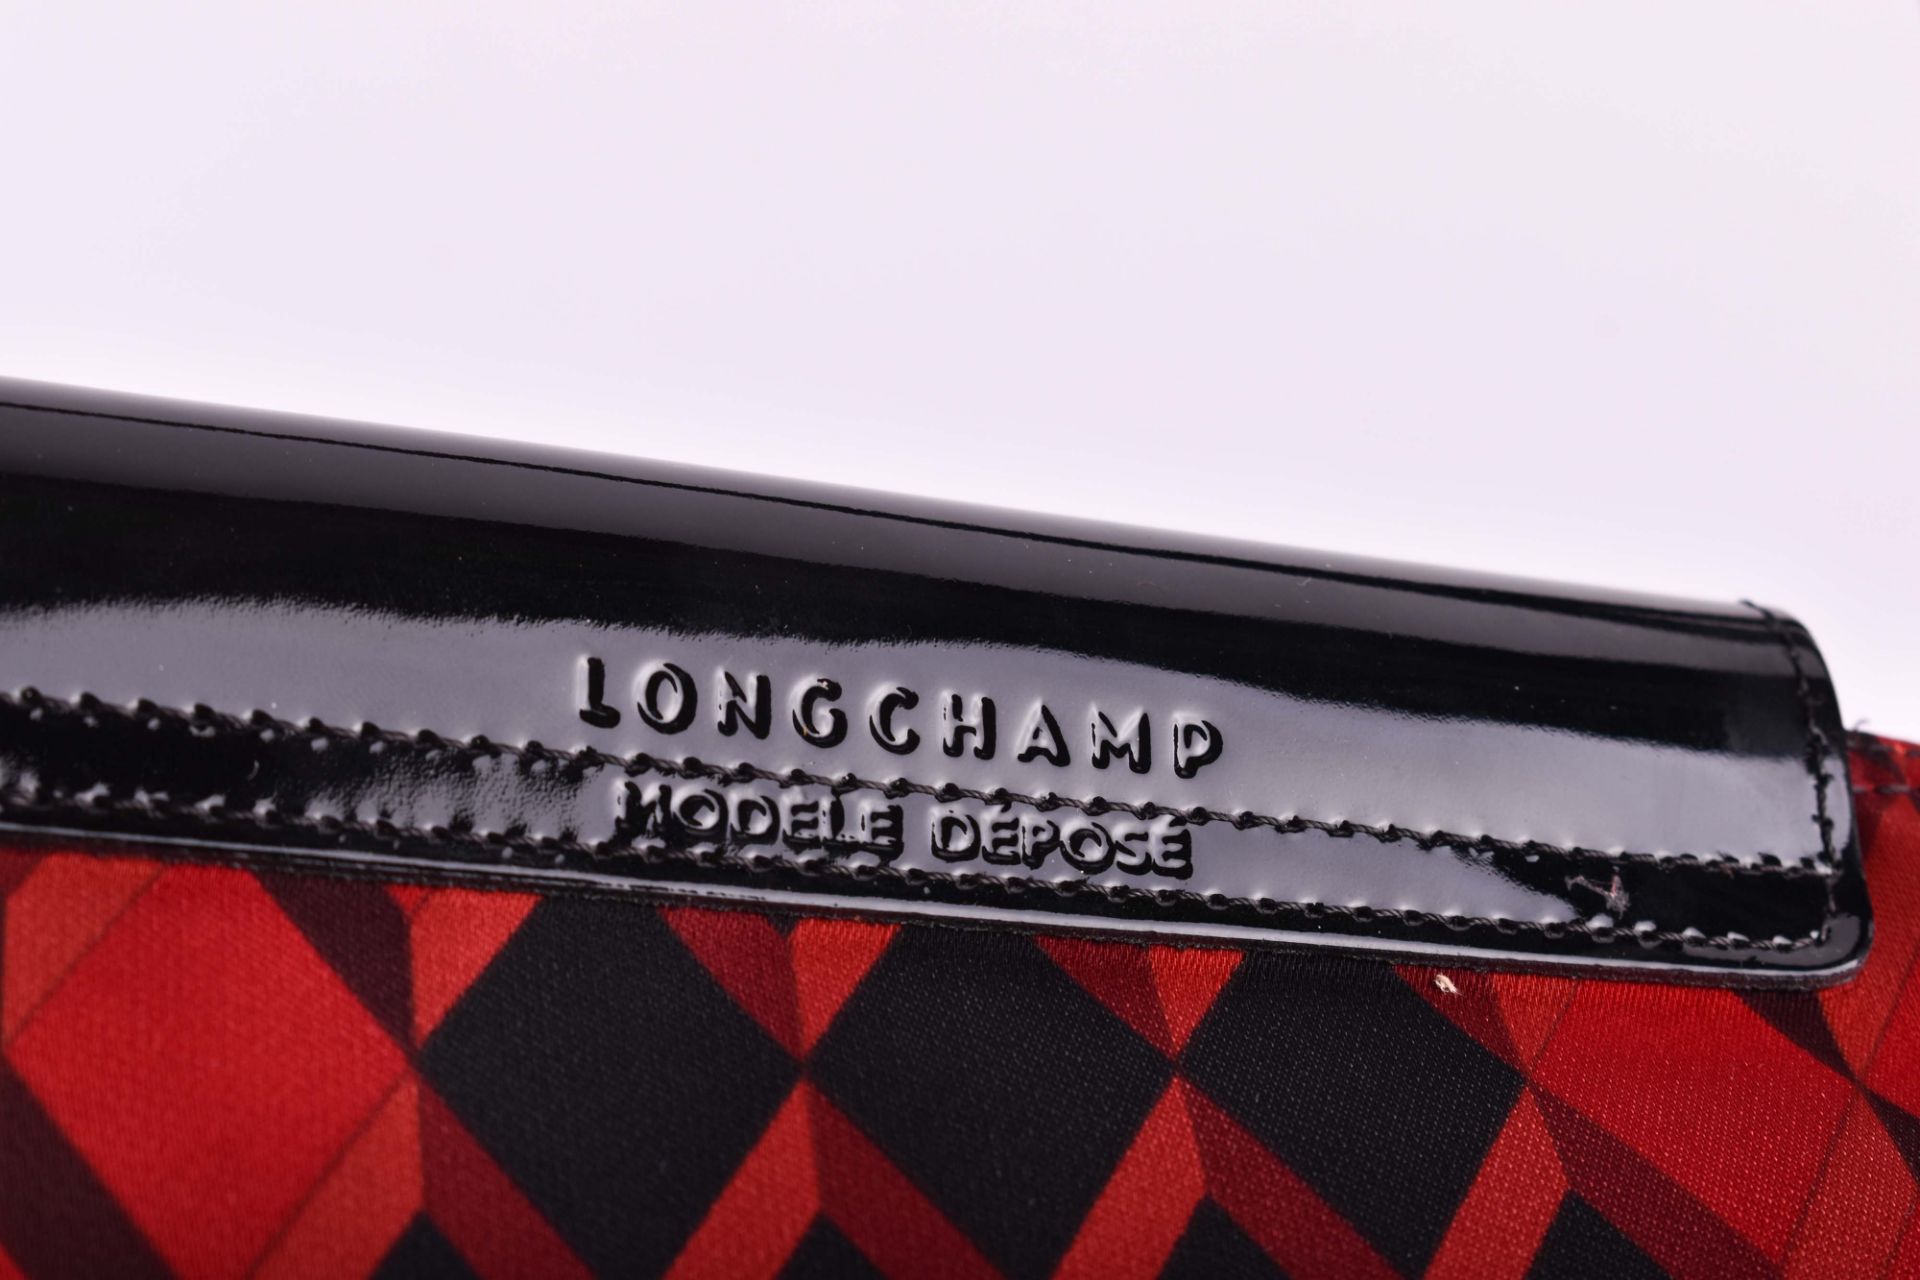 Handbag Longchamp Le Pliage modele depose - Image 6 of 6